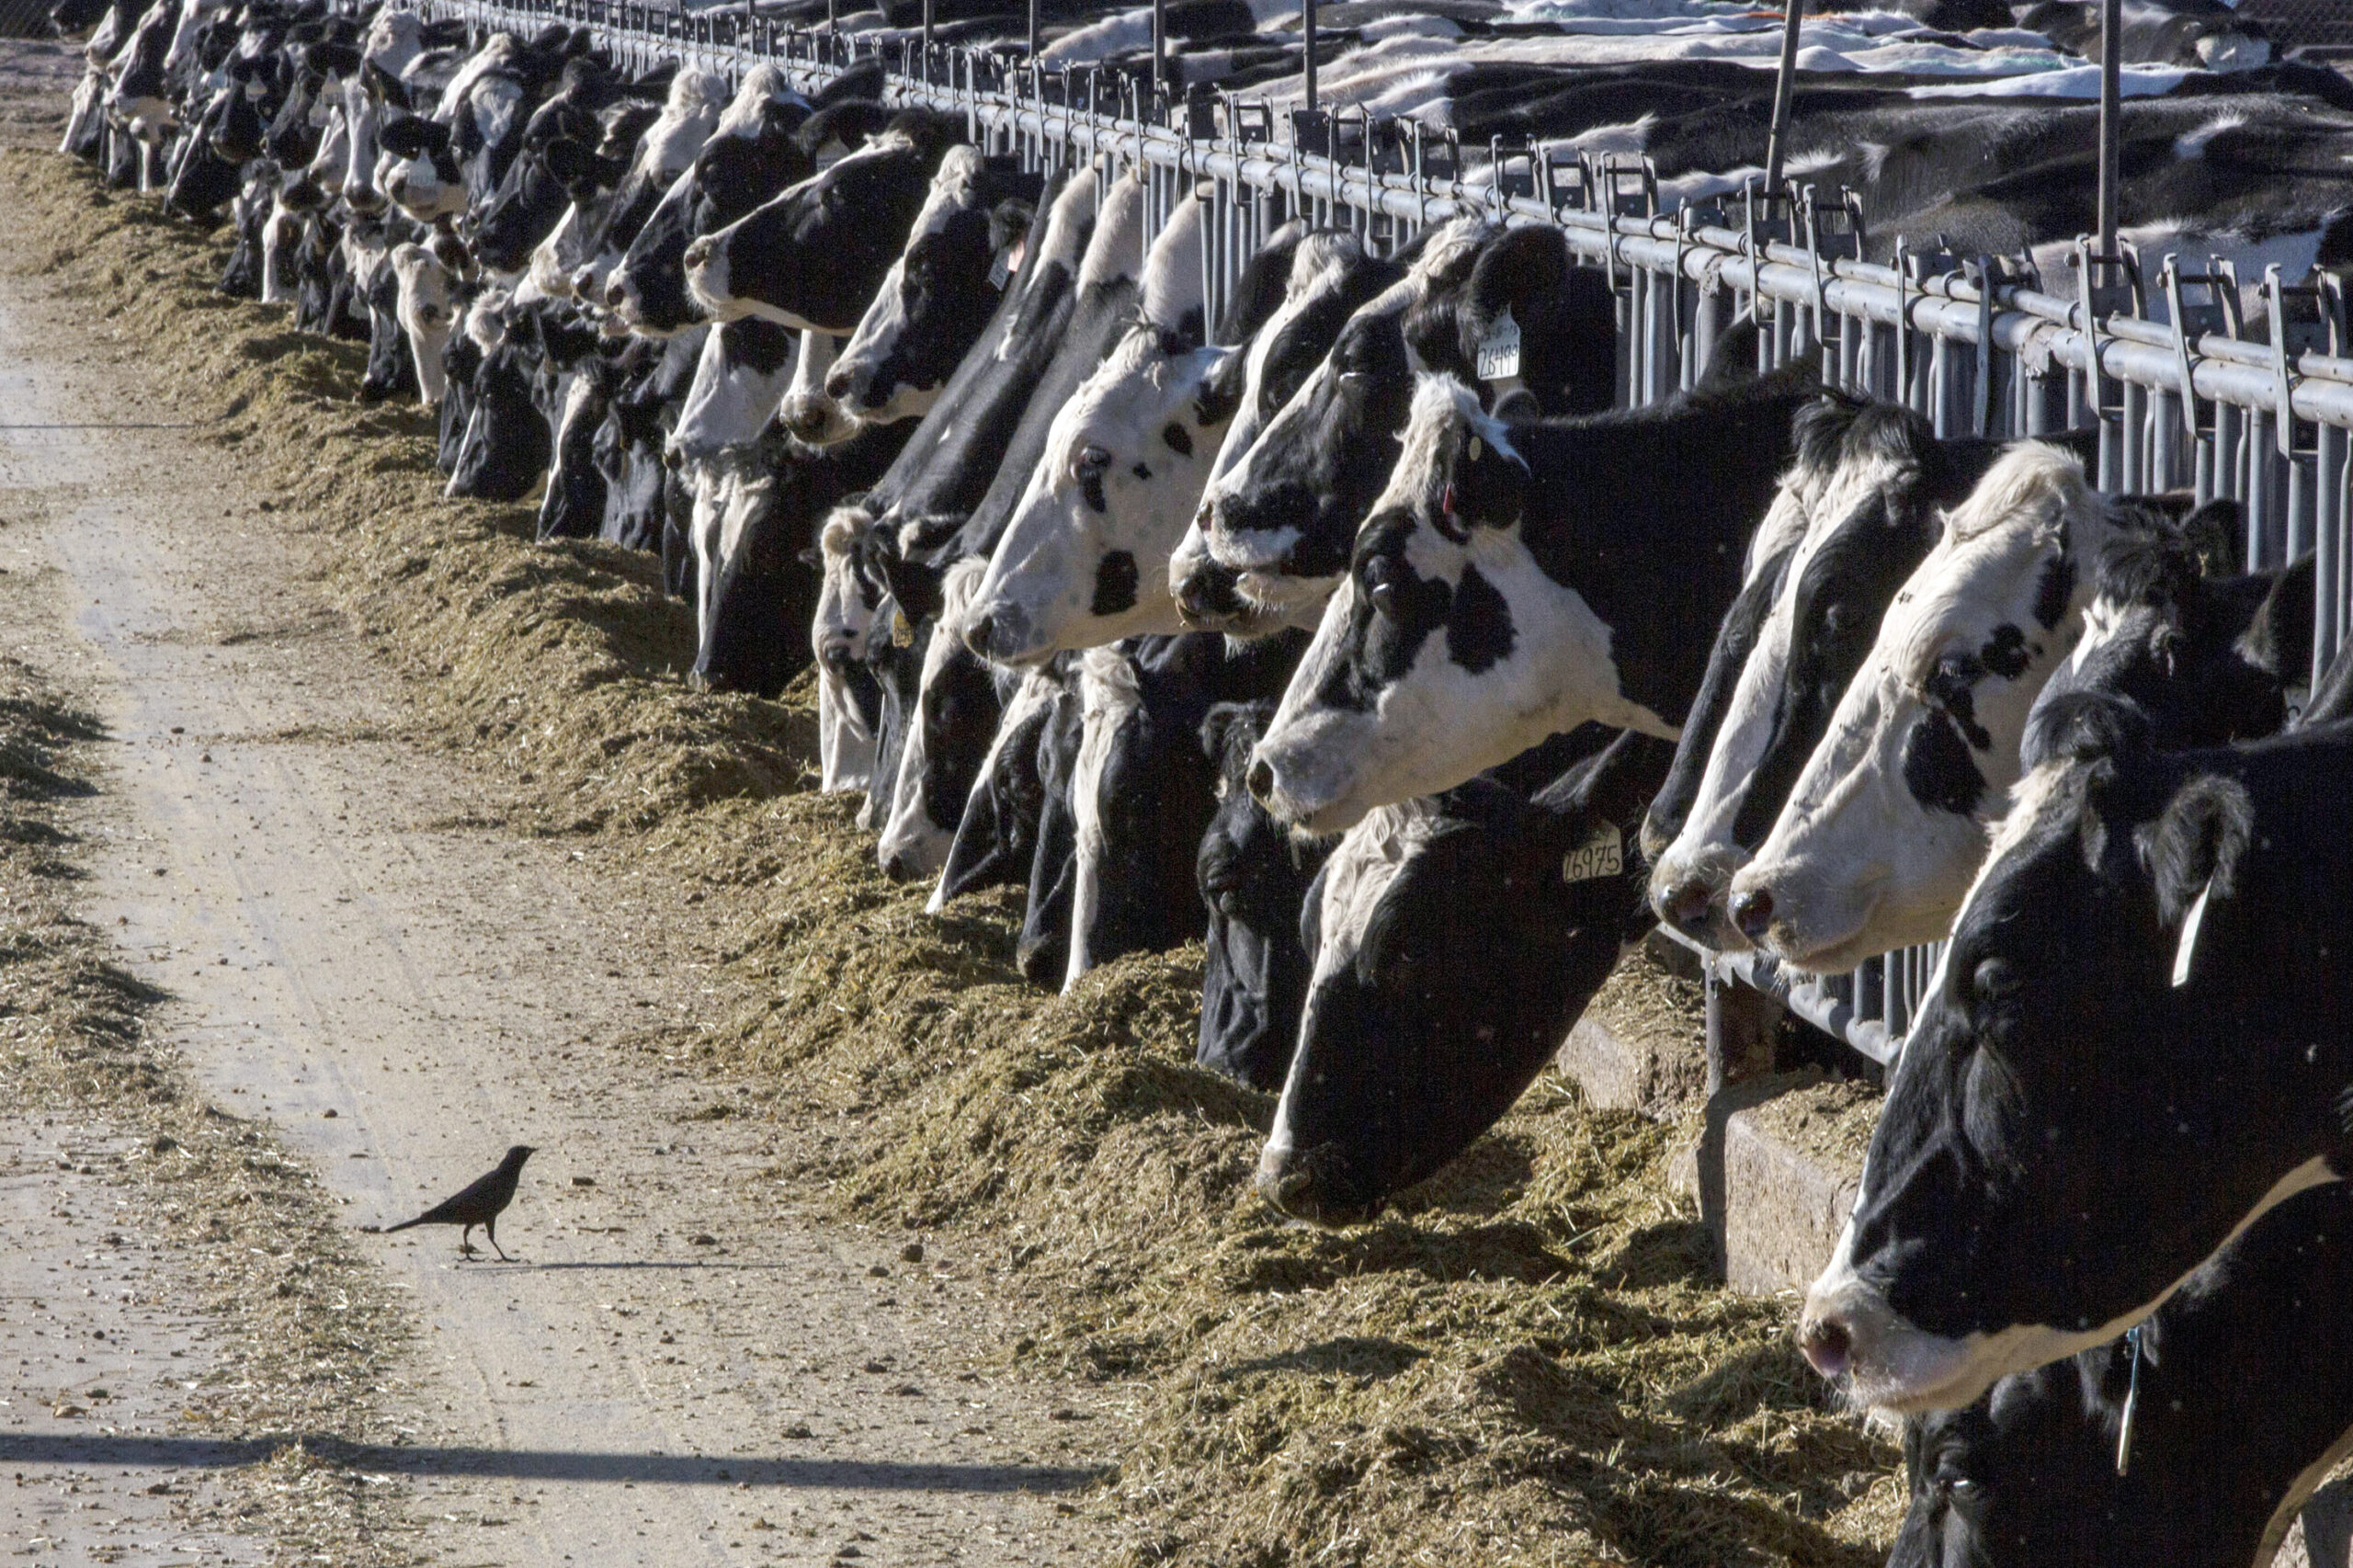 USDA requiring avian flu testing in some dairy cows